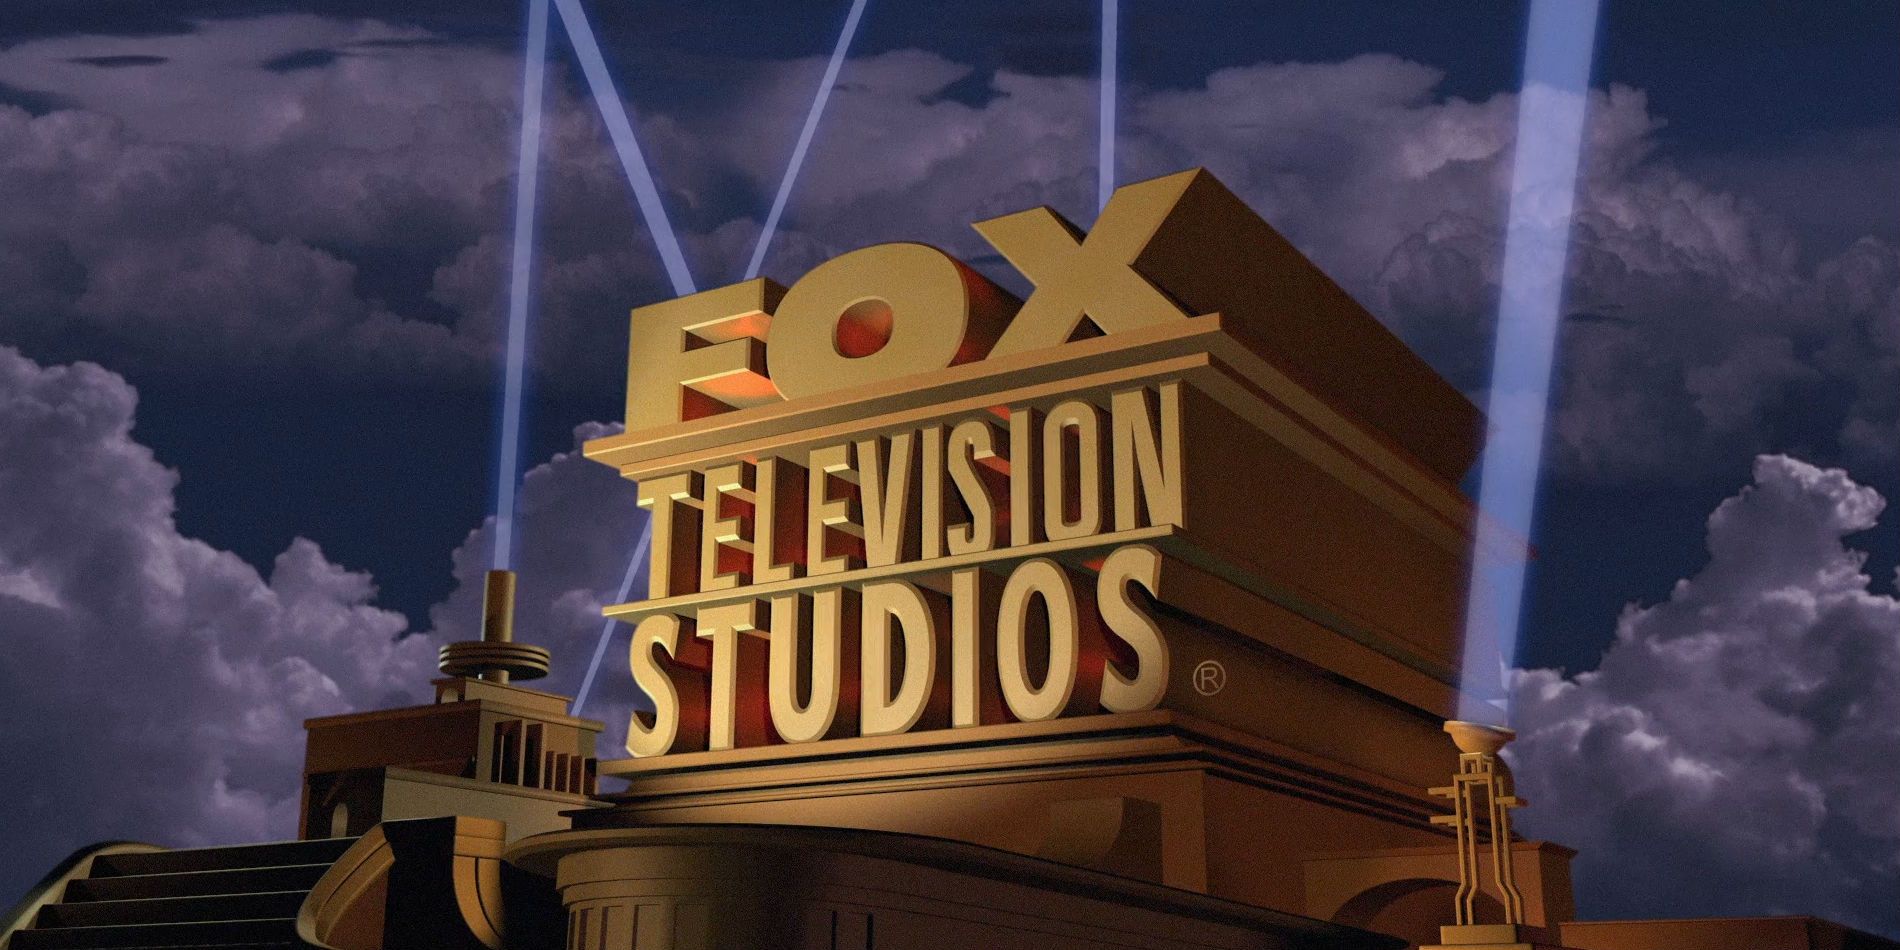 20th Century Fox Logo Evolution 